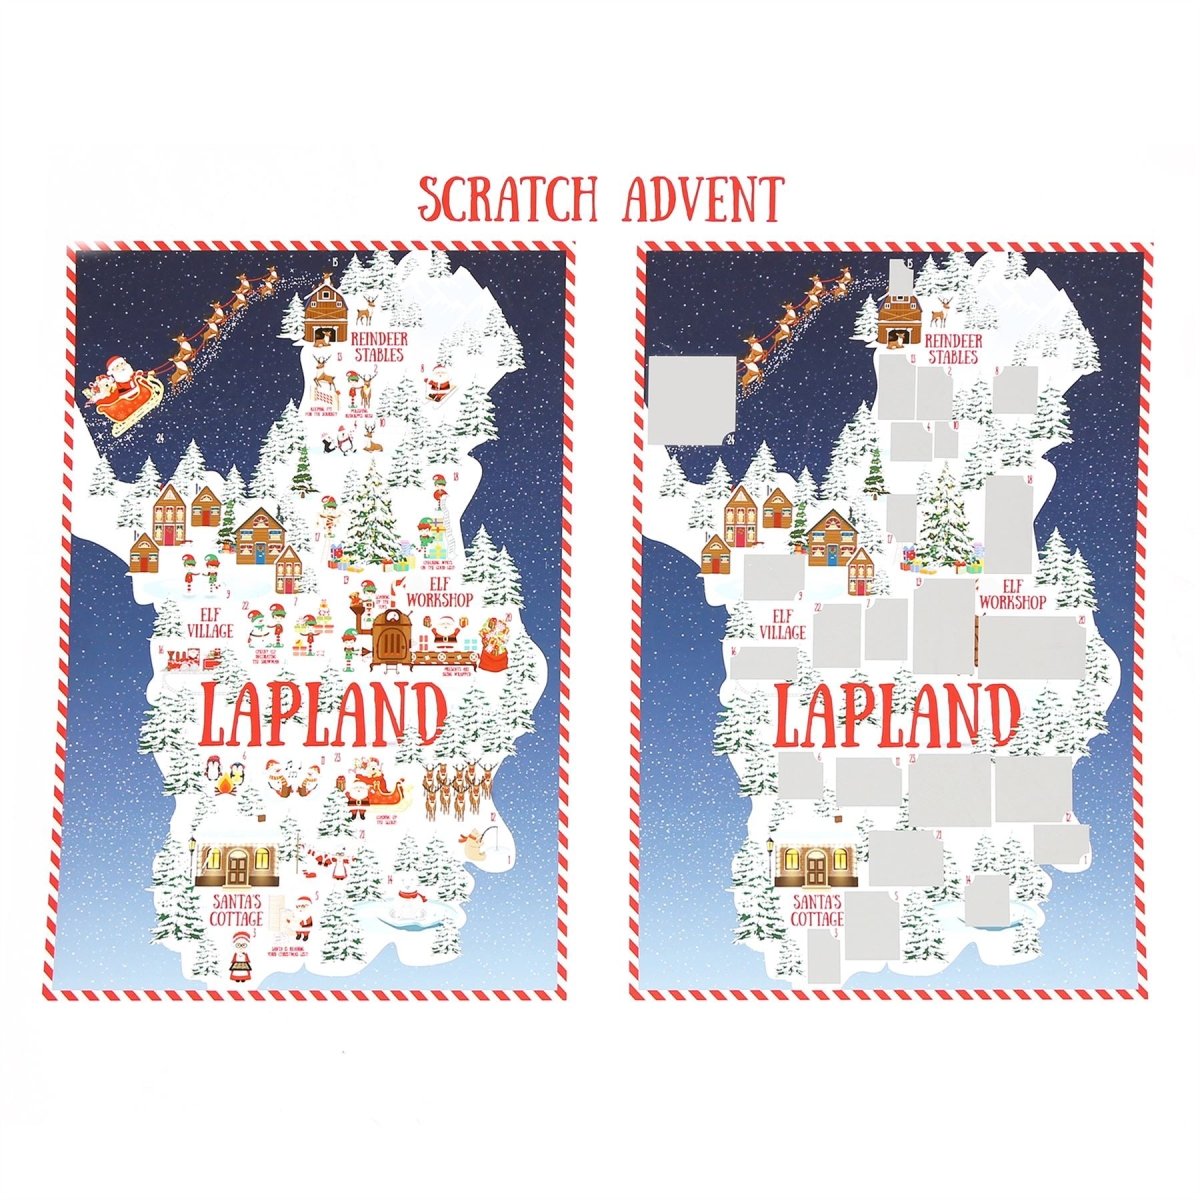 Lapland Christmas Scratch Advent Calendar | A4 Countdown To Christmas Scratch Off Advent Calendar Poster